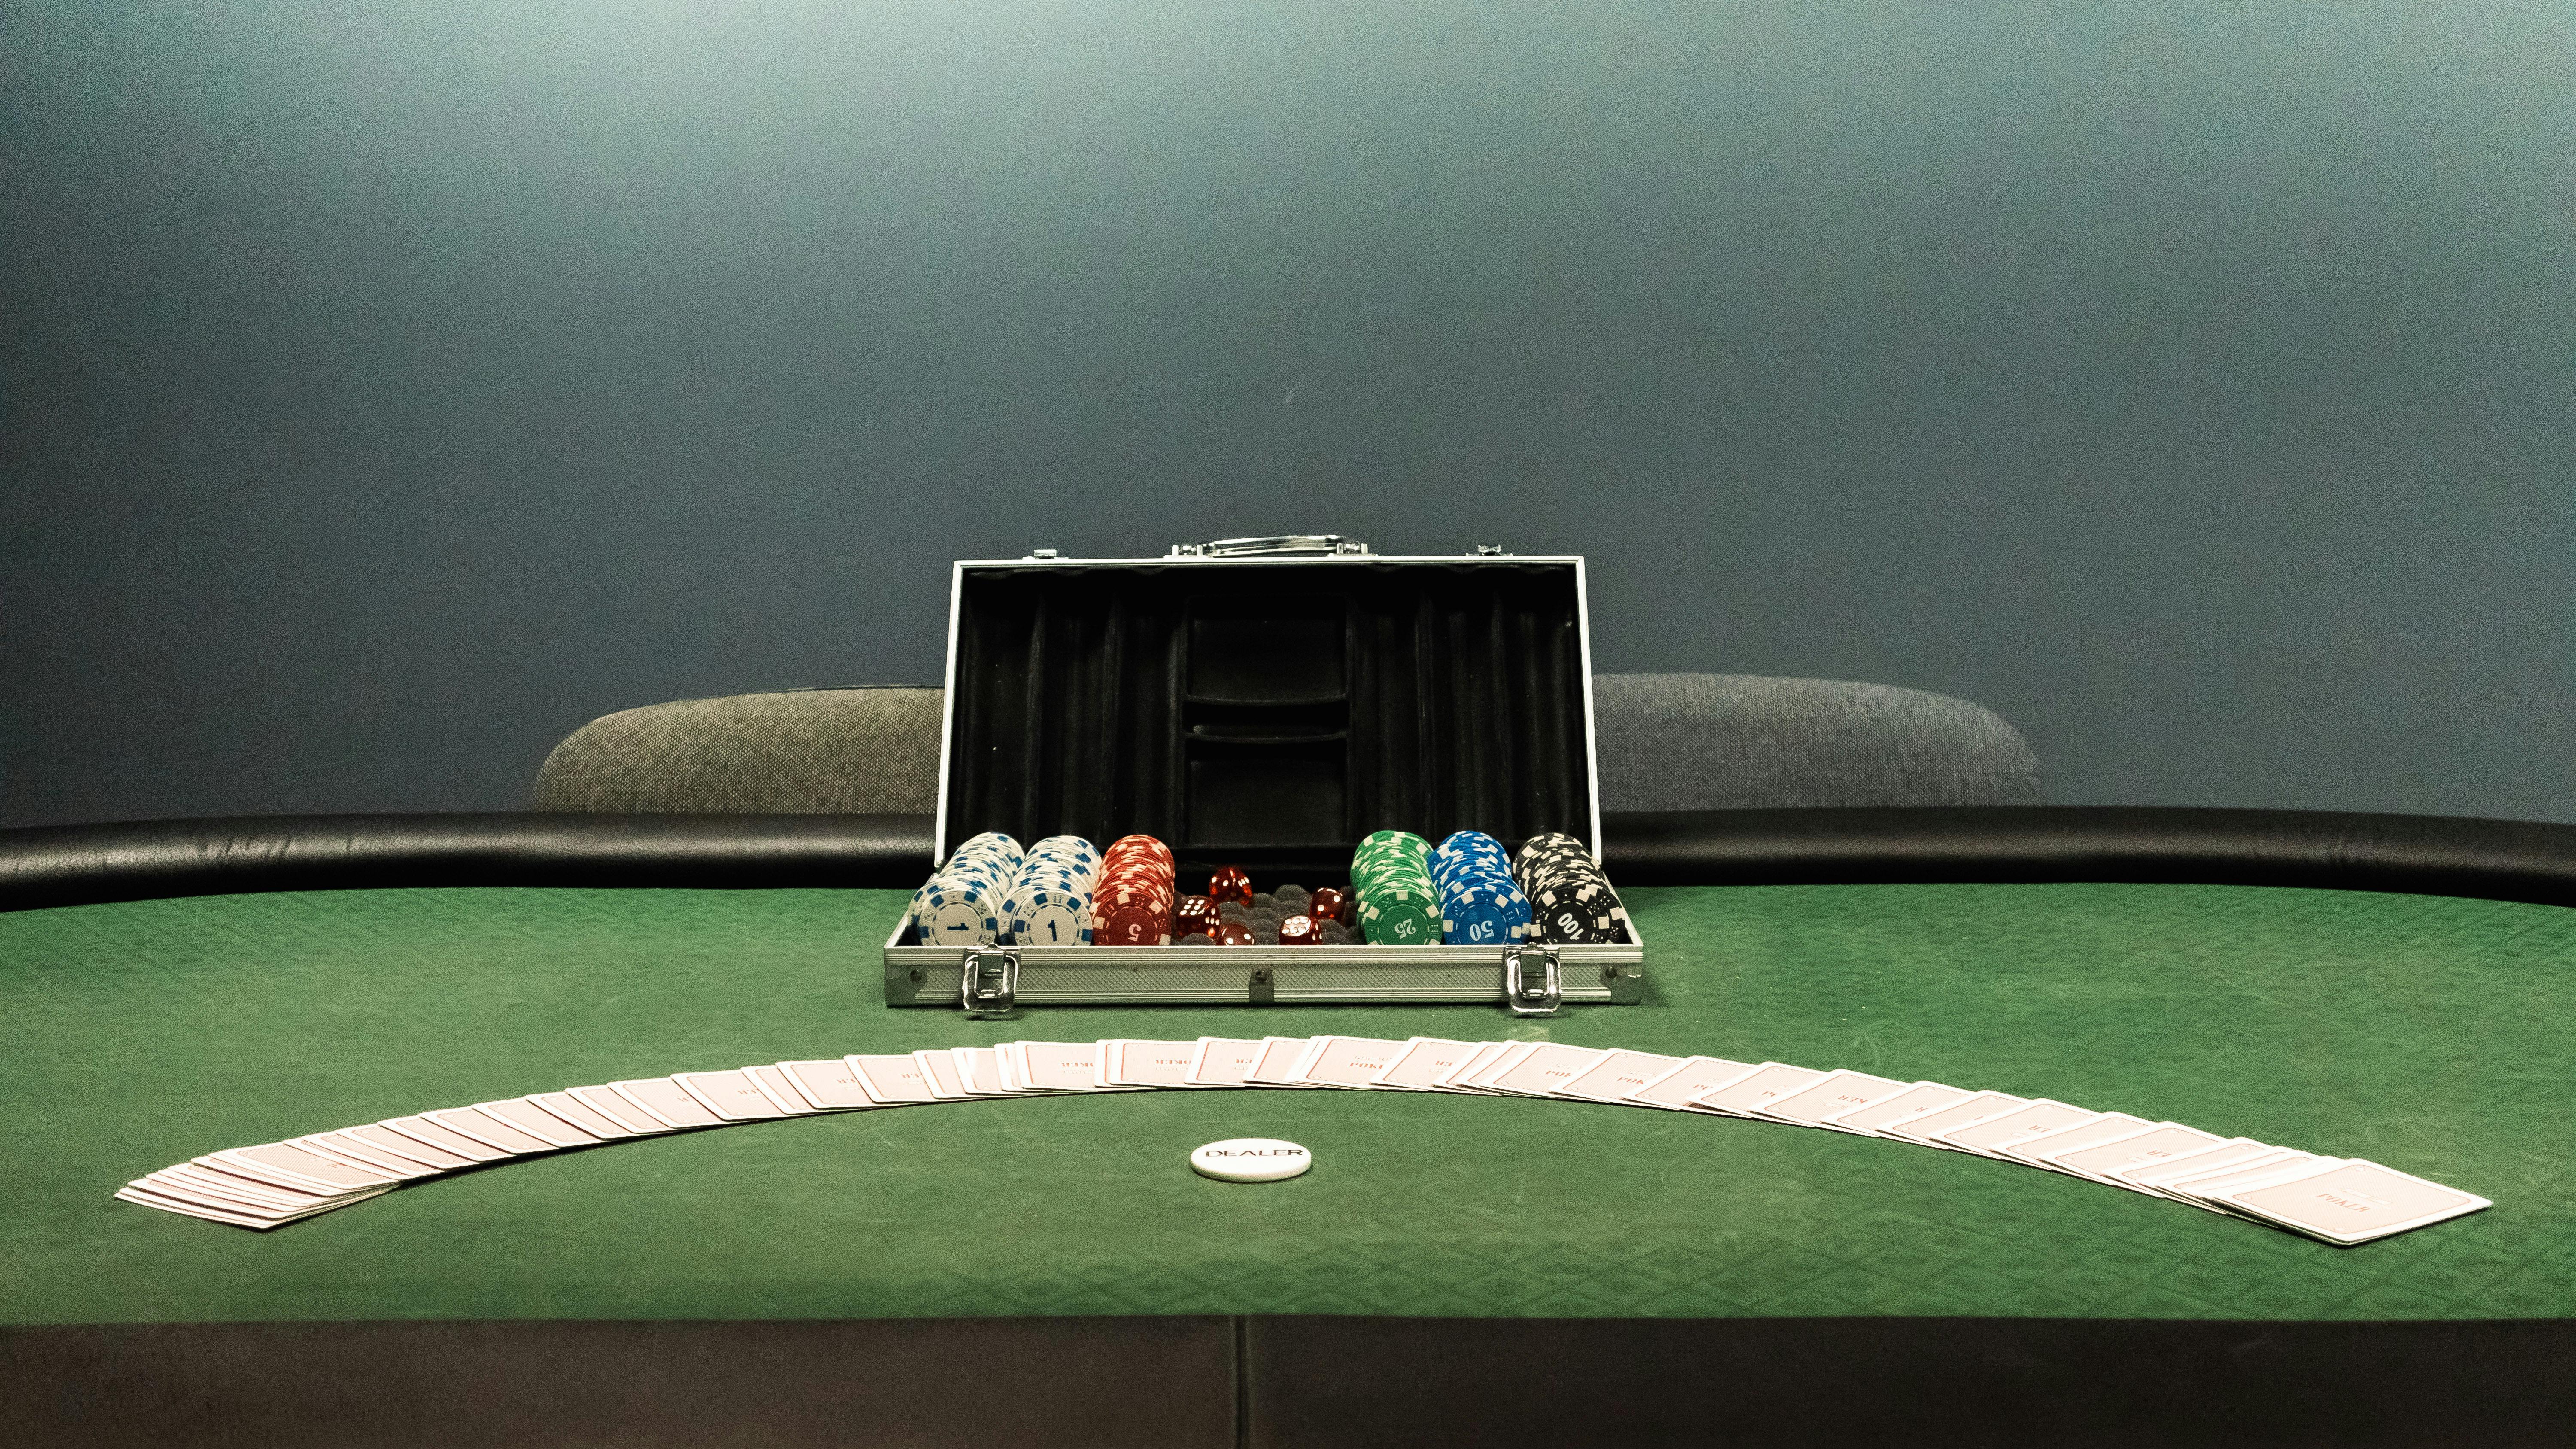 A poker table arrangement | Source: Pexels